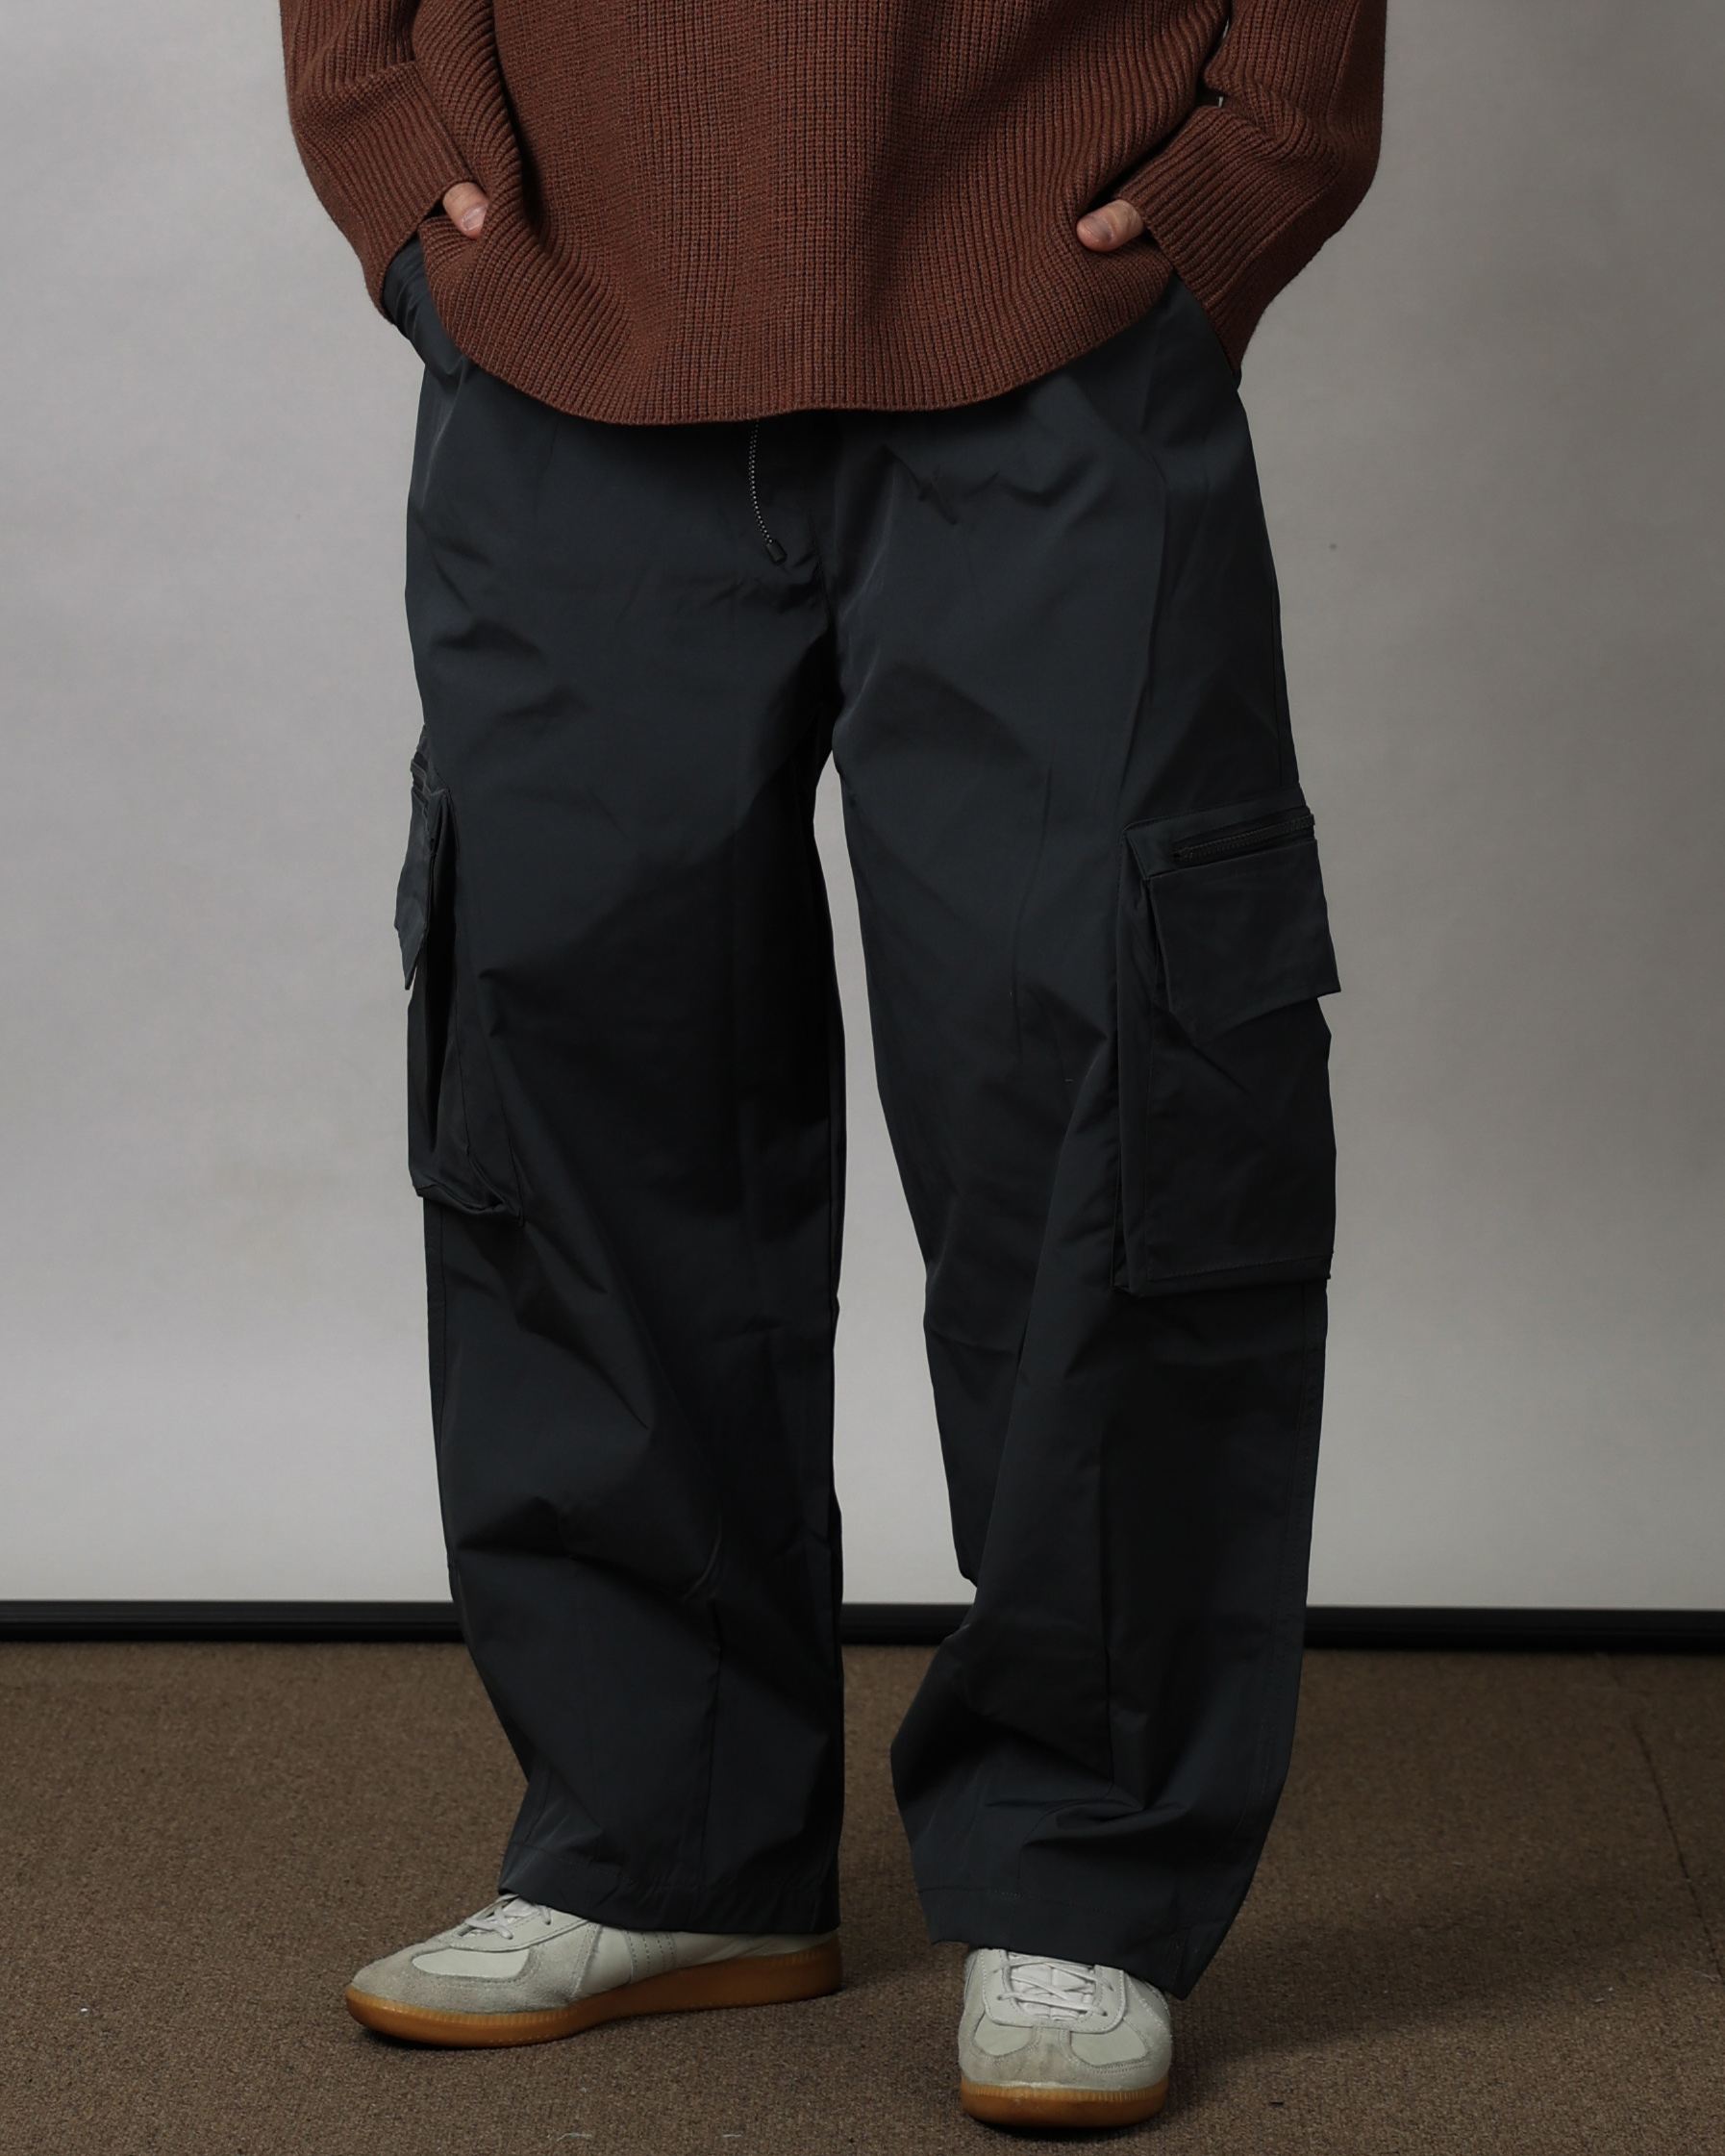 HOMAG Nylon Wide Zip Cargo Pants (Black/Charcoal)